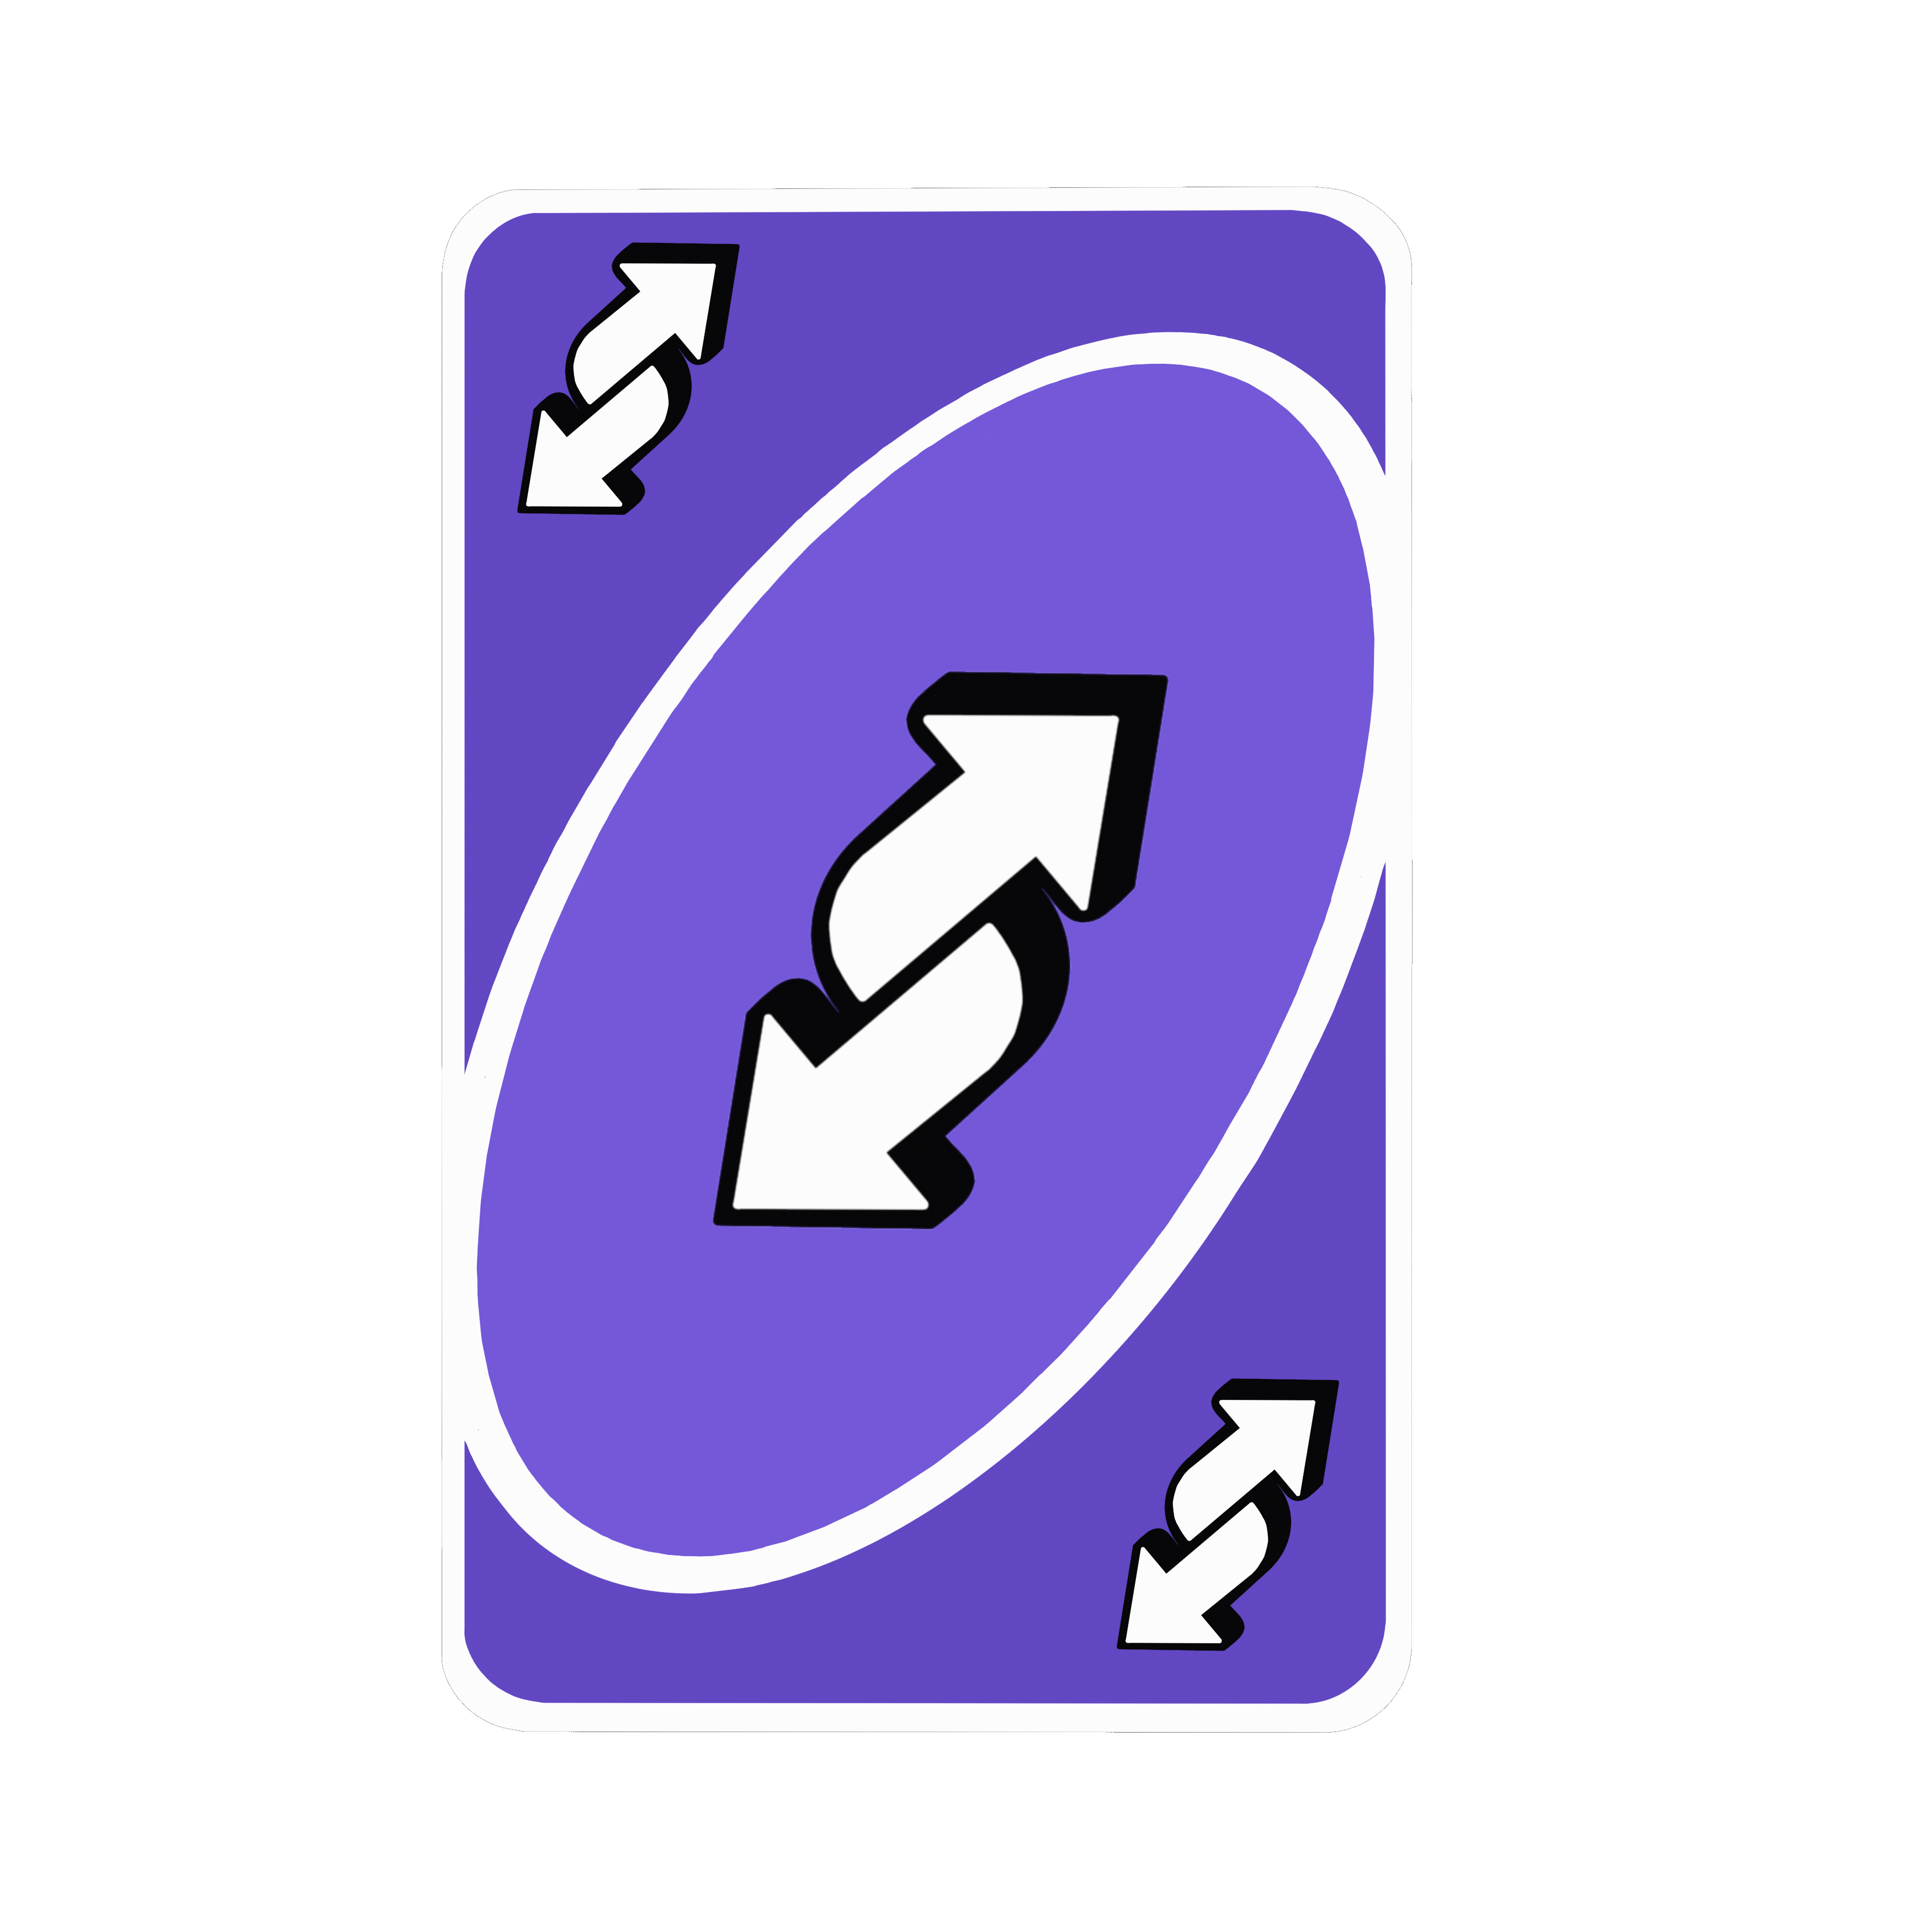 uno reverse card on Make a GIF